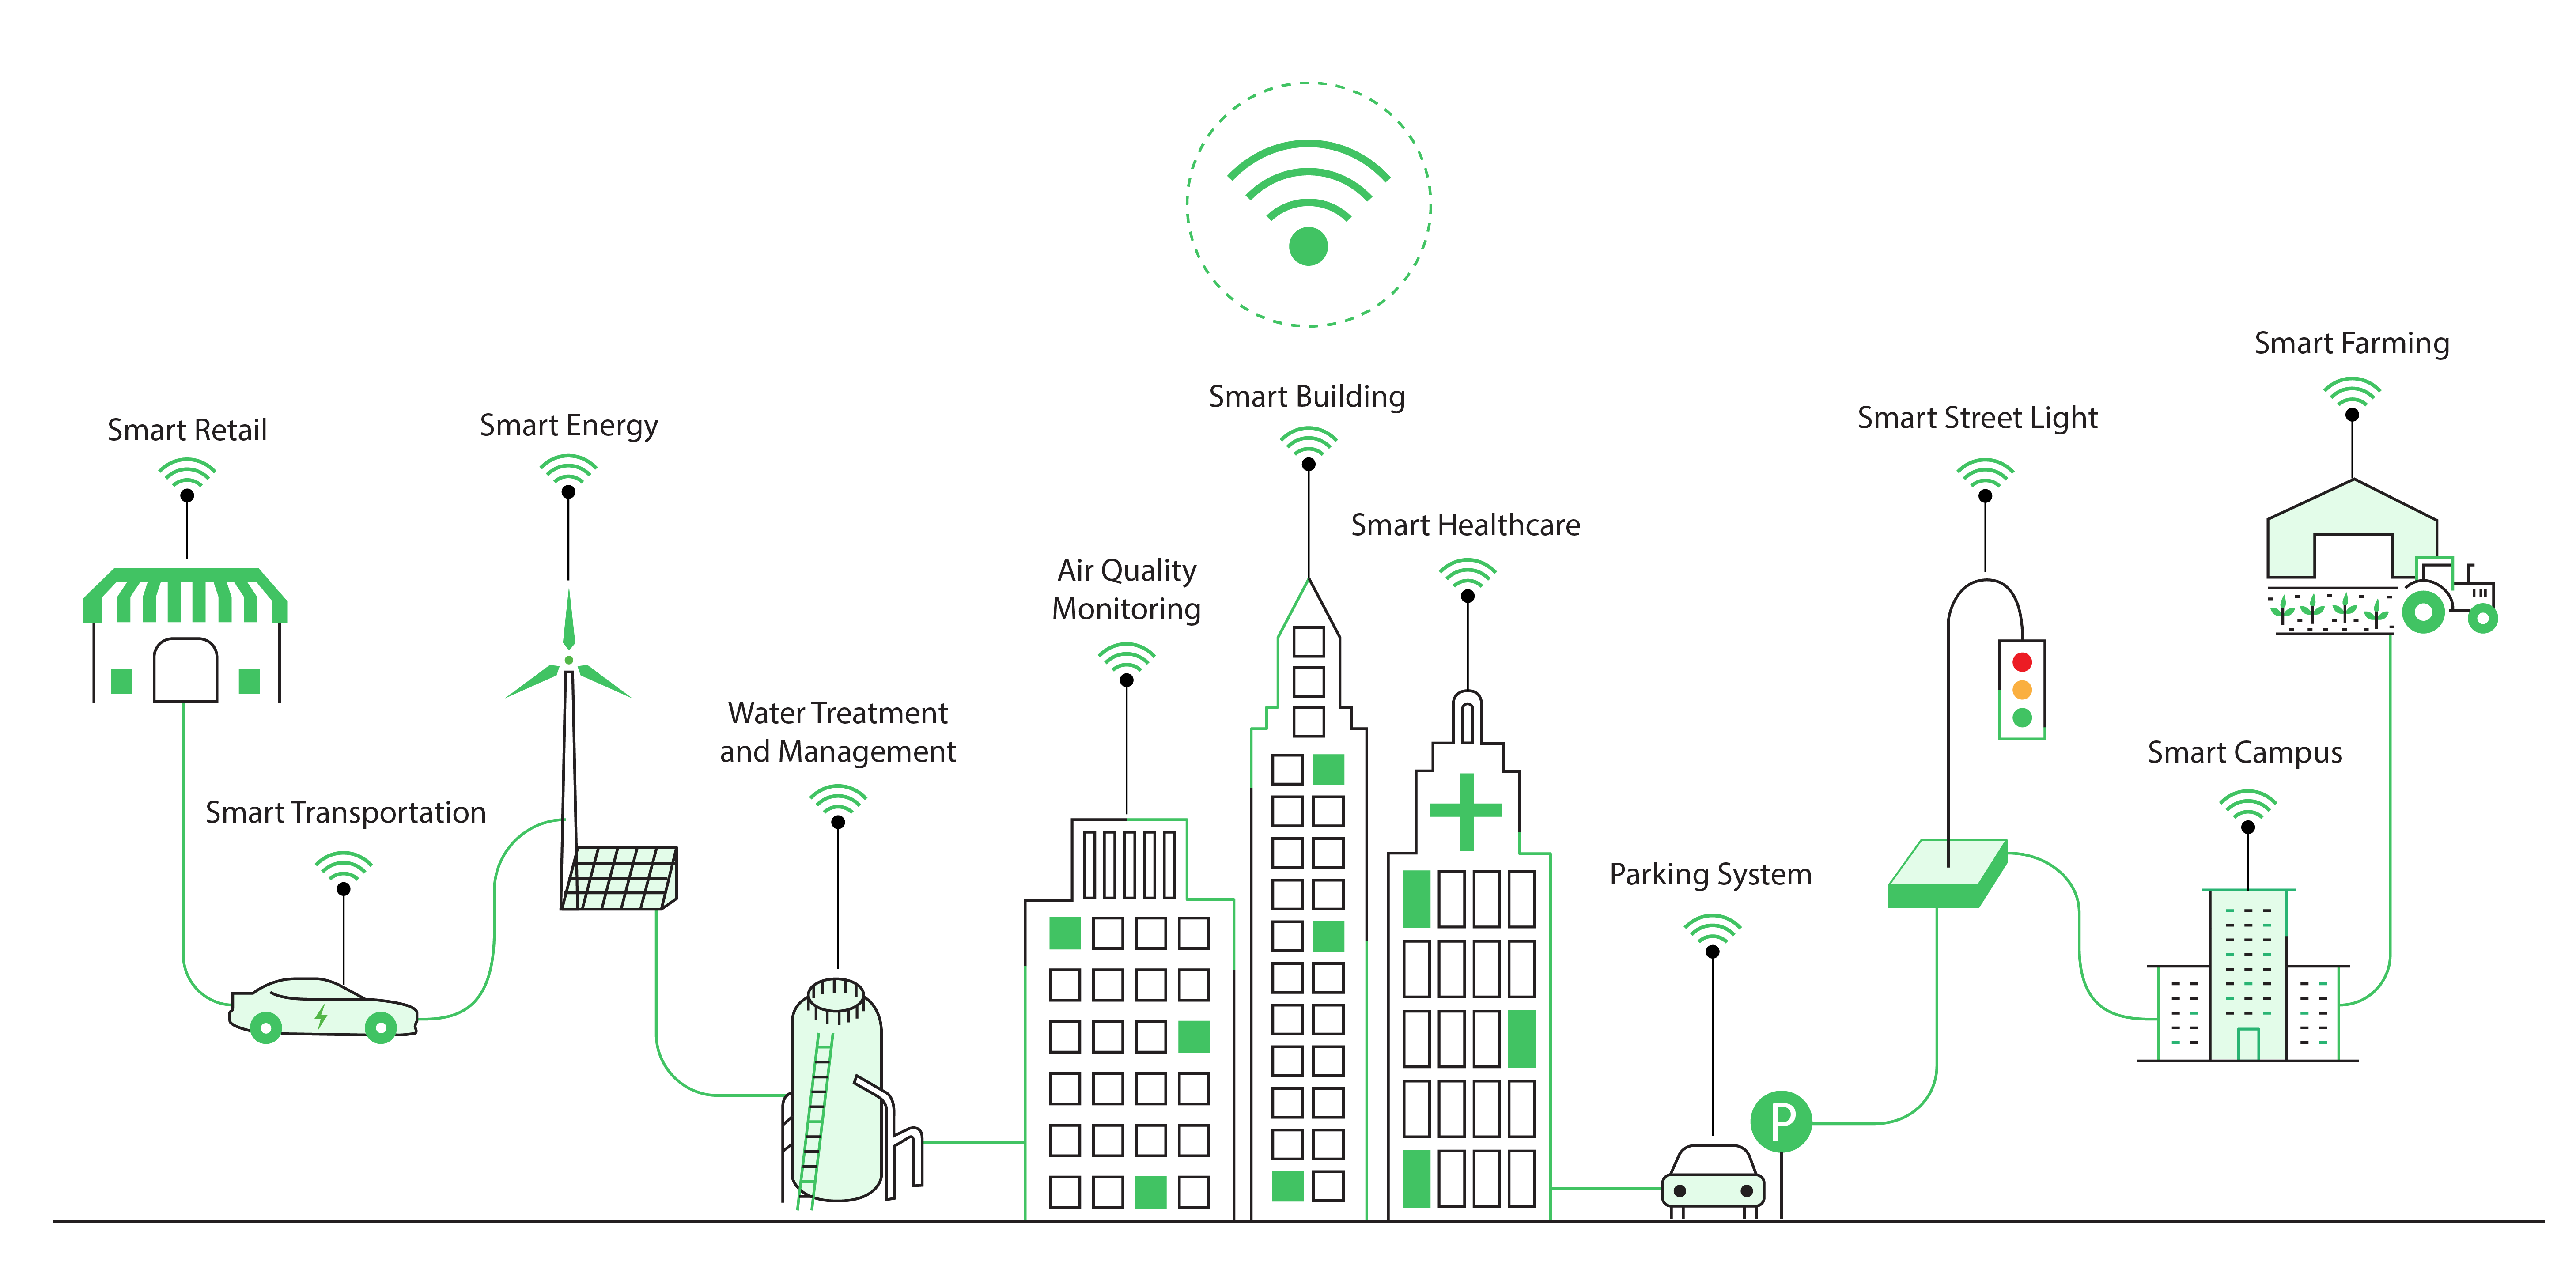 Iot Smart City Model